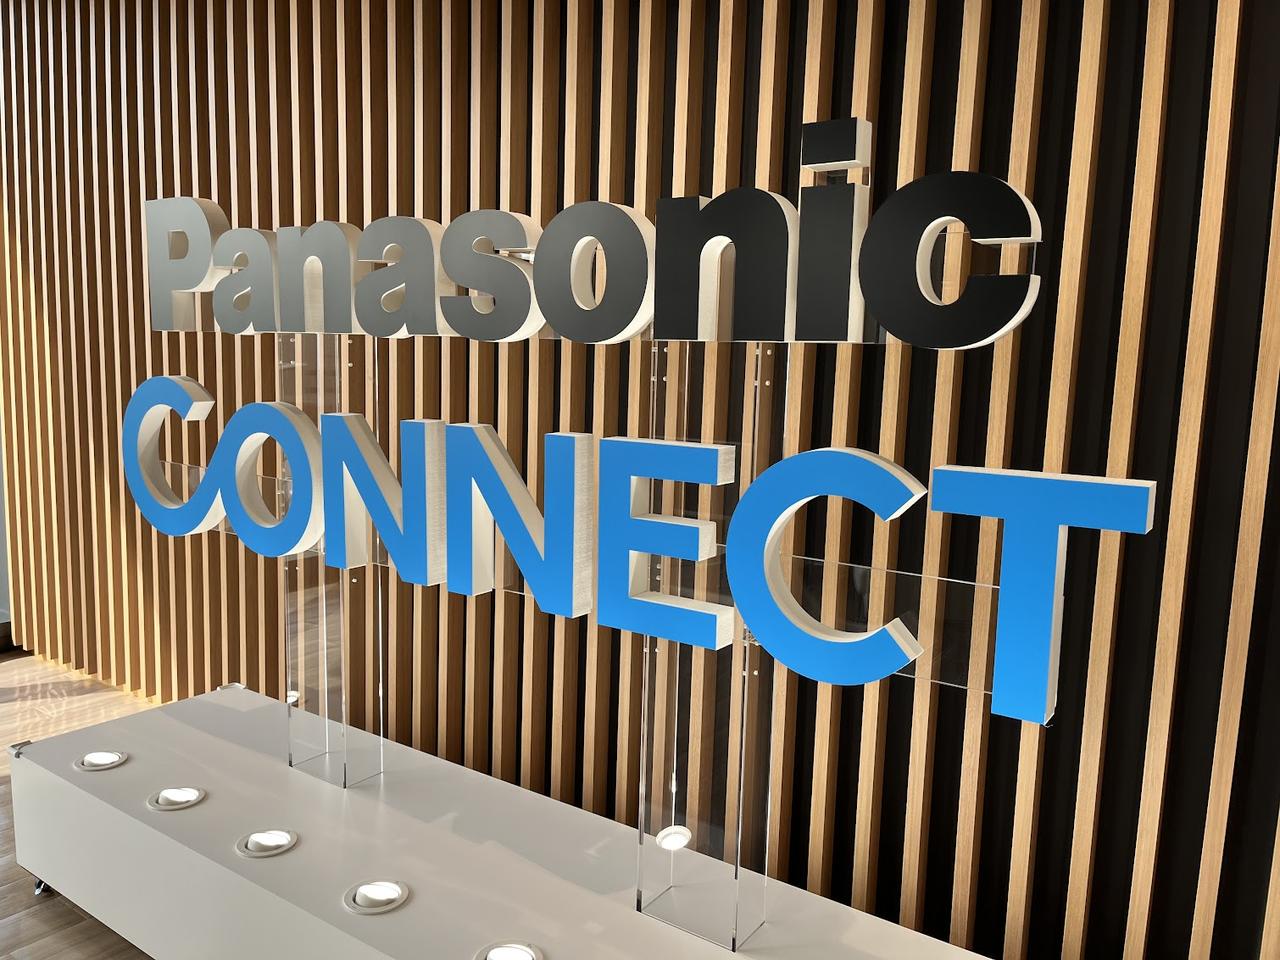 Panasonic Connect